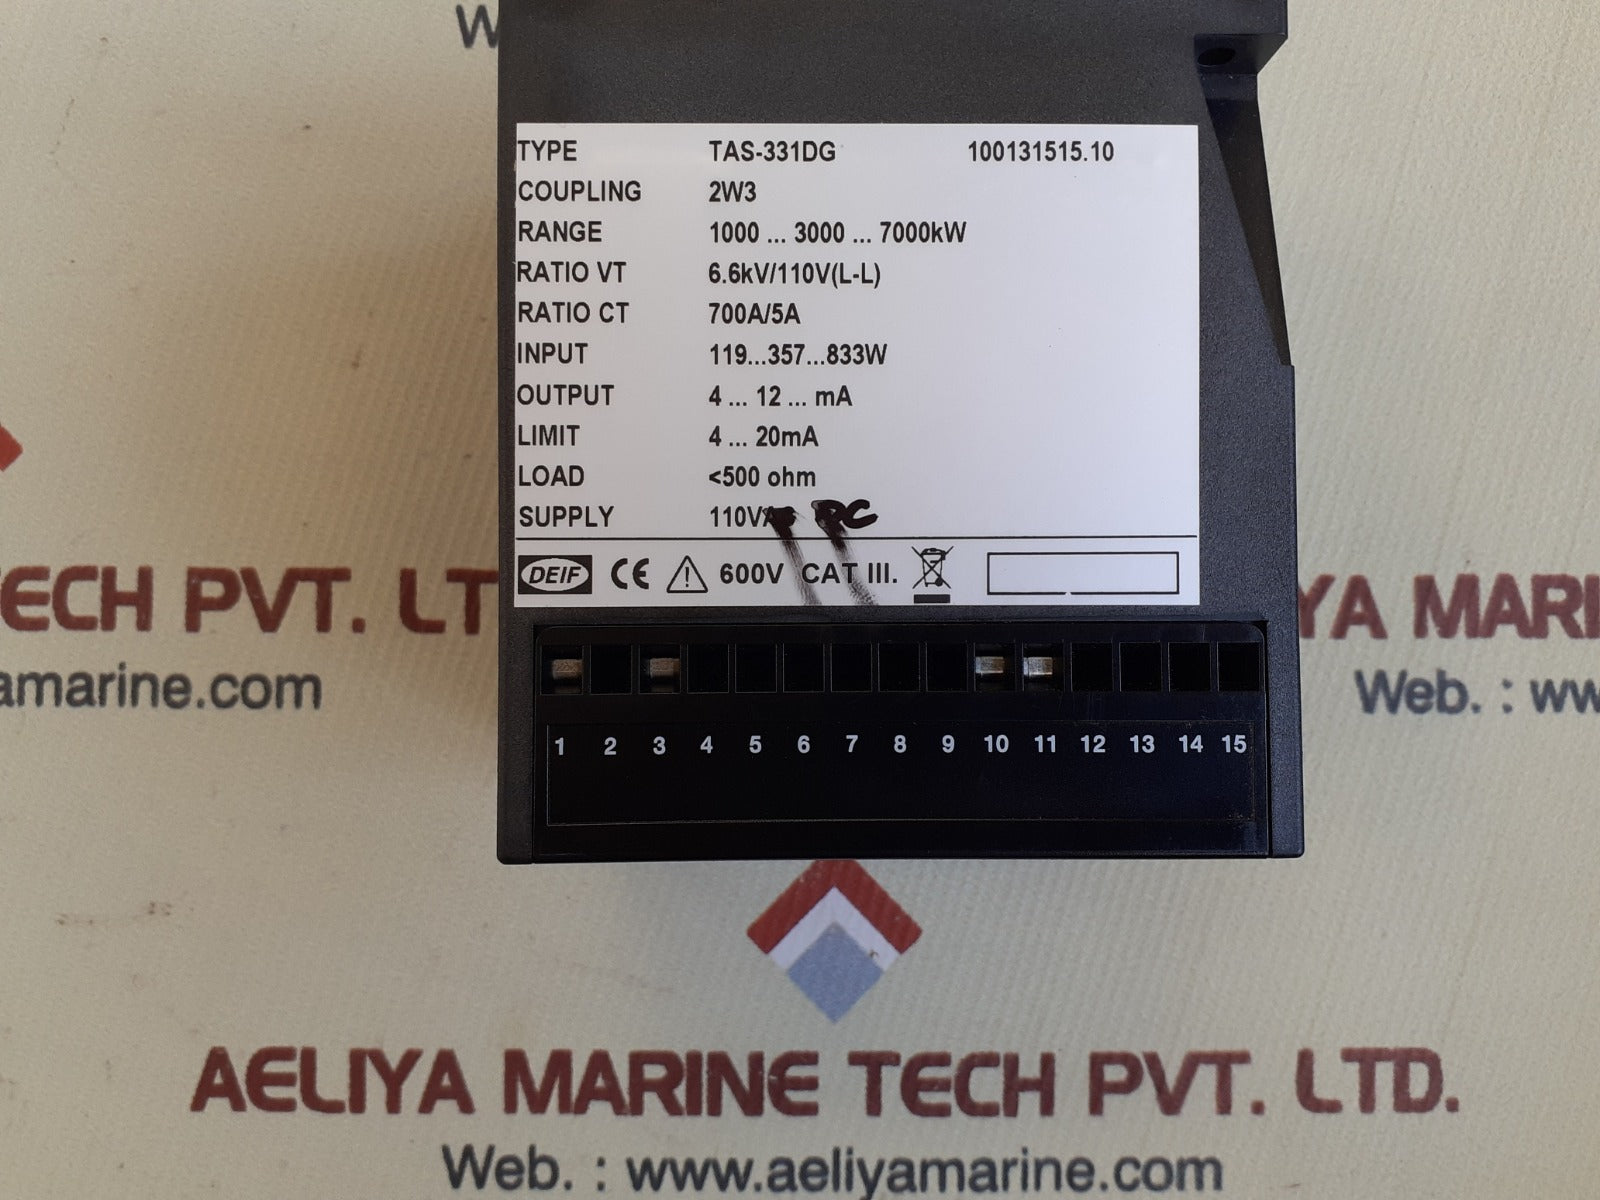 Deif tas-331dg 100131515.10 selectable transducer